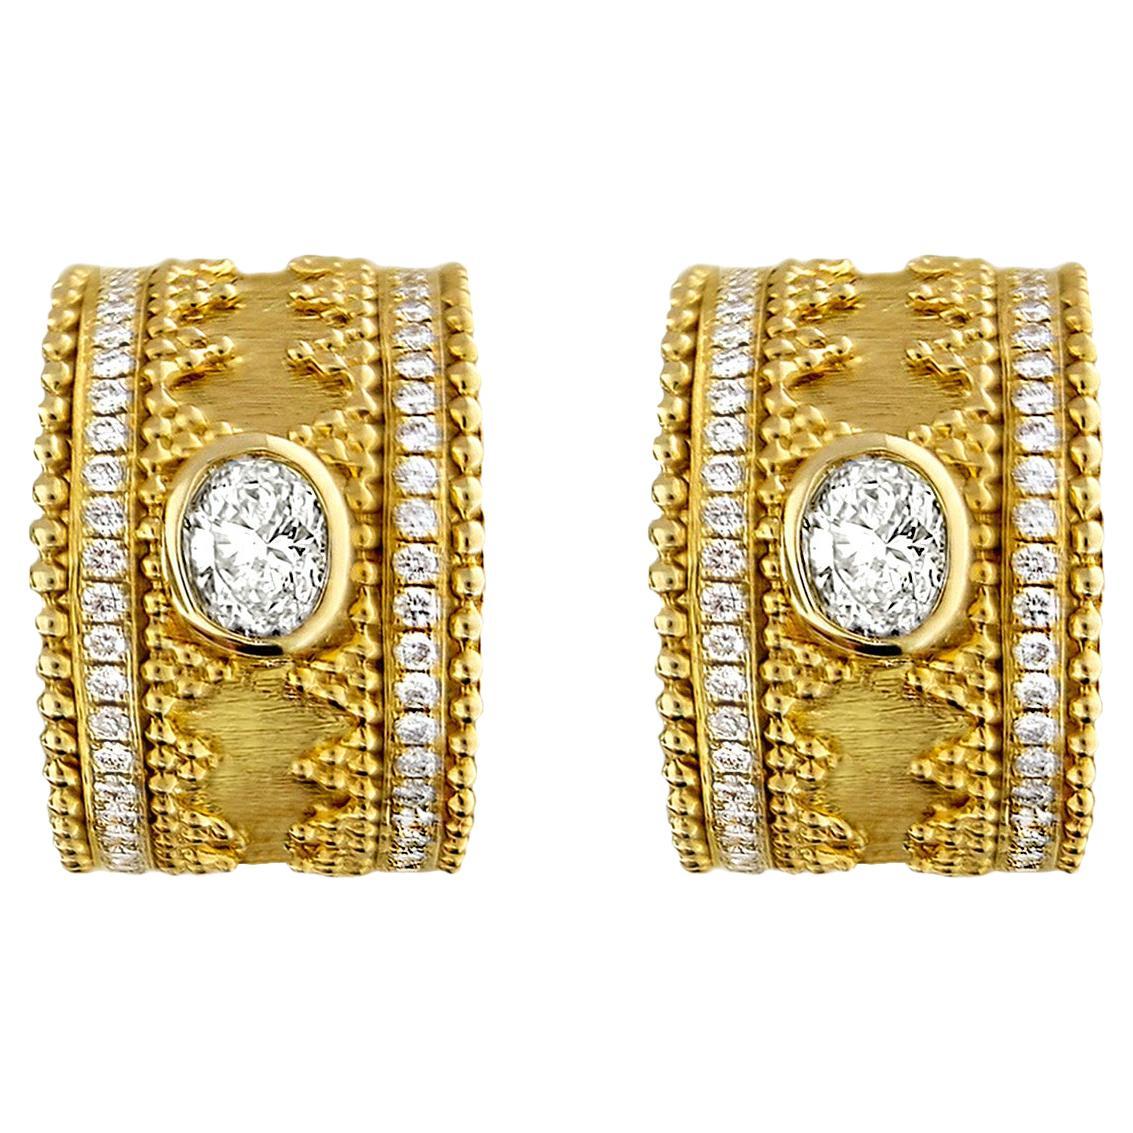 18 Karat Gold Granulata Style Diamond Earrings